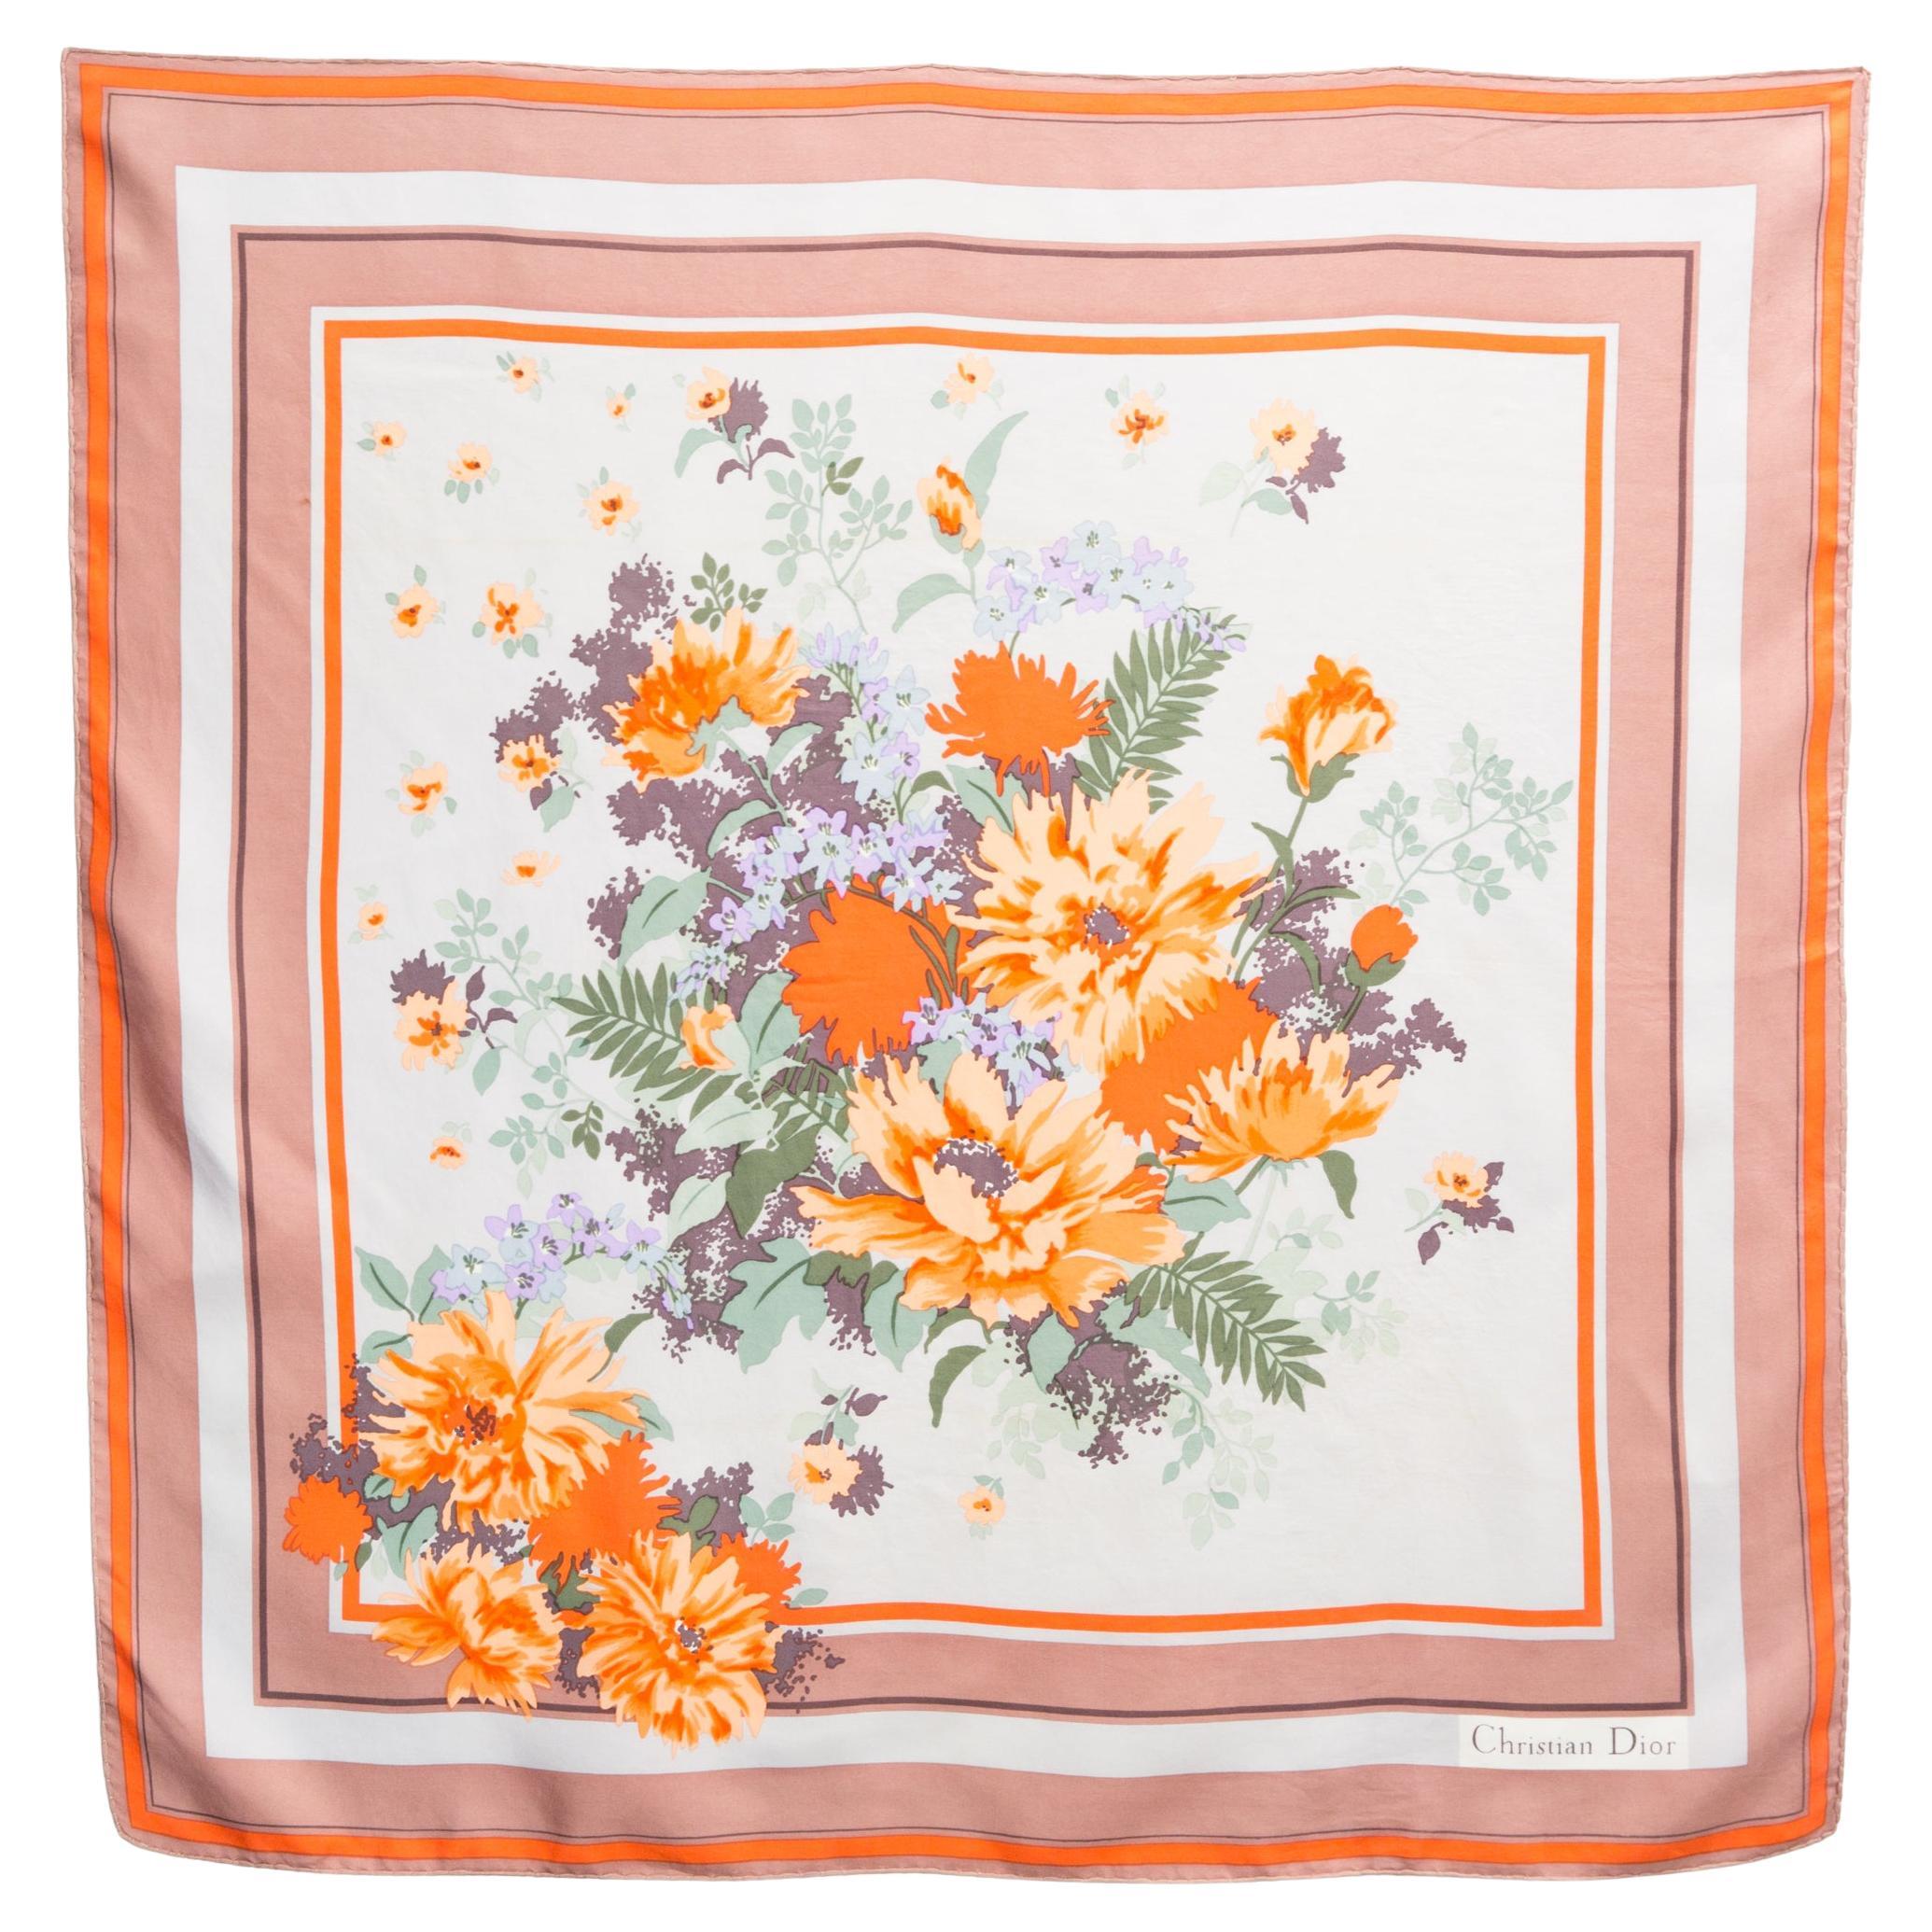 Pañuelo de seda floral Christian Dior en venta